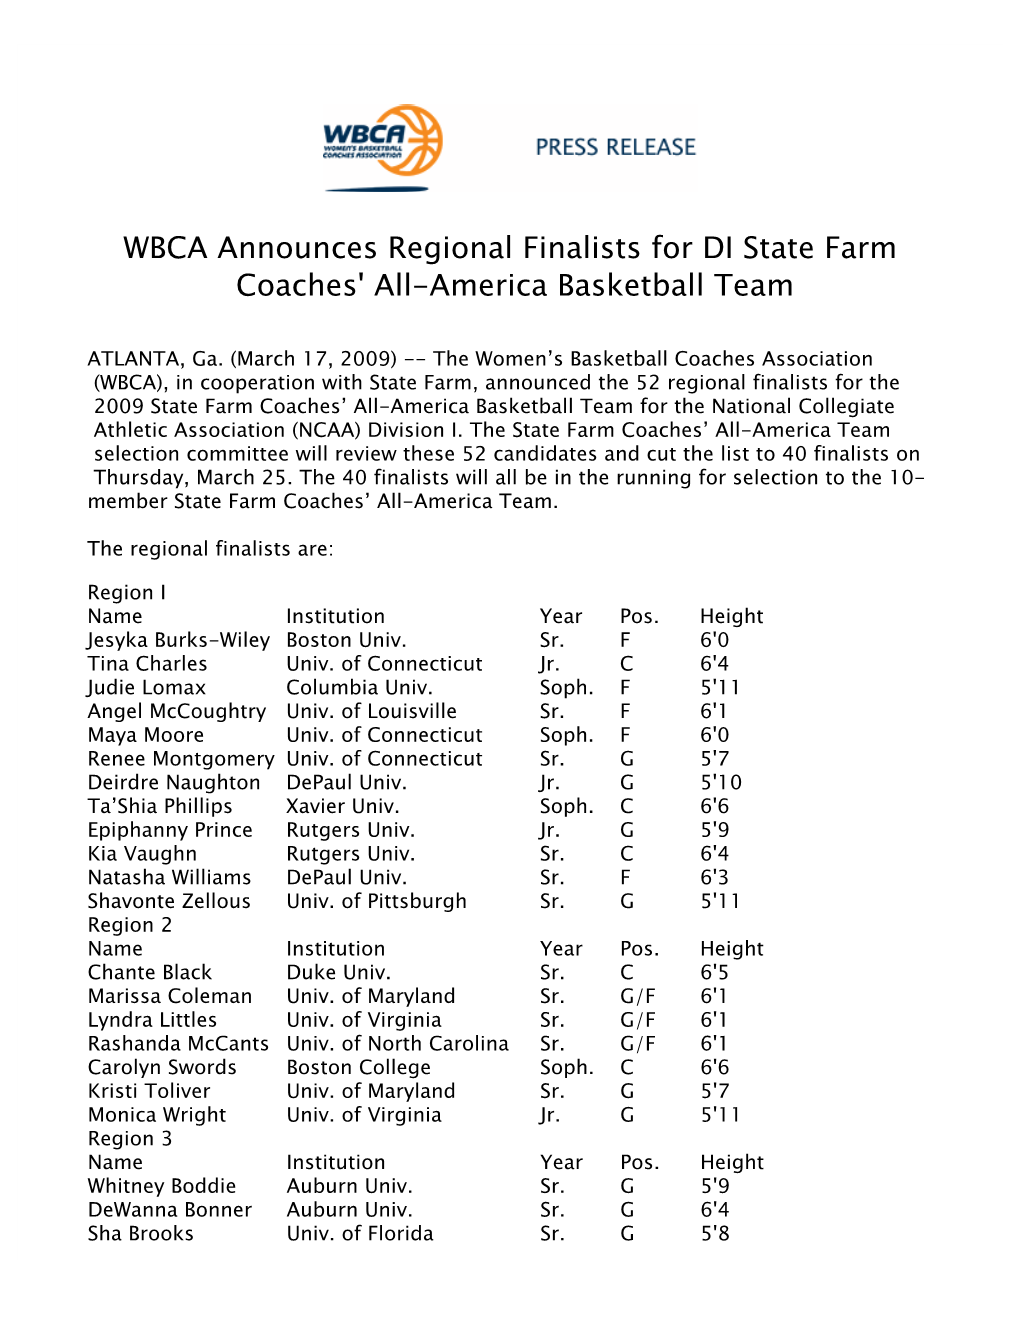 WBCA Announces Regional Finalists for DI State Farm Coaches' All-America Basketball Team